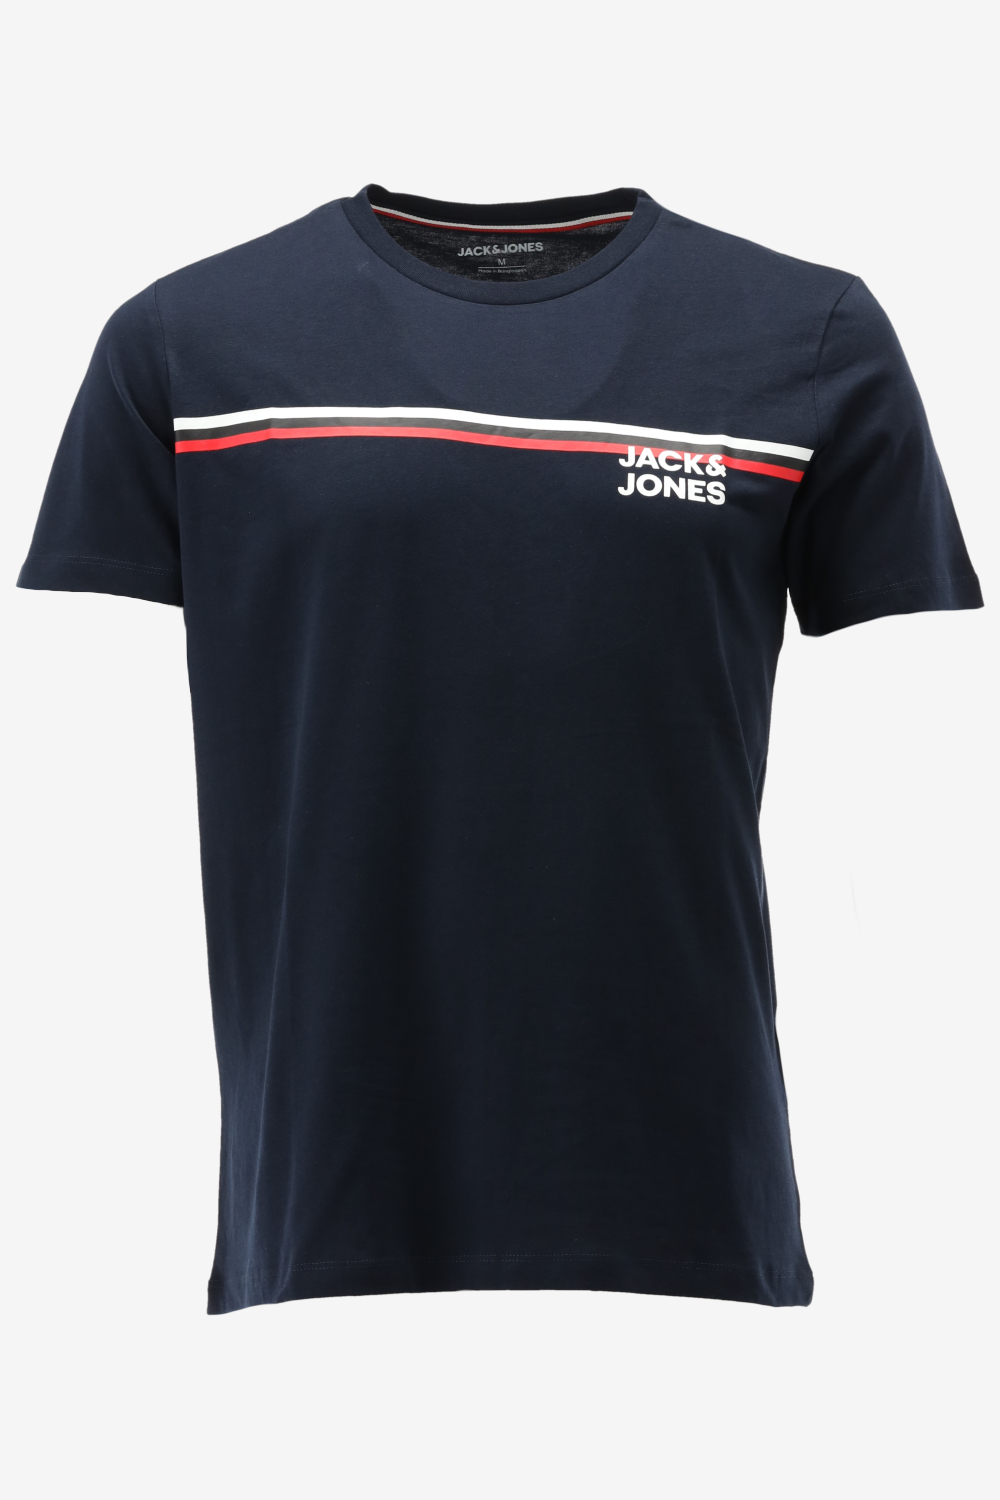 Jack&Jones T-shirt ATLAS